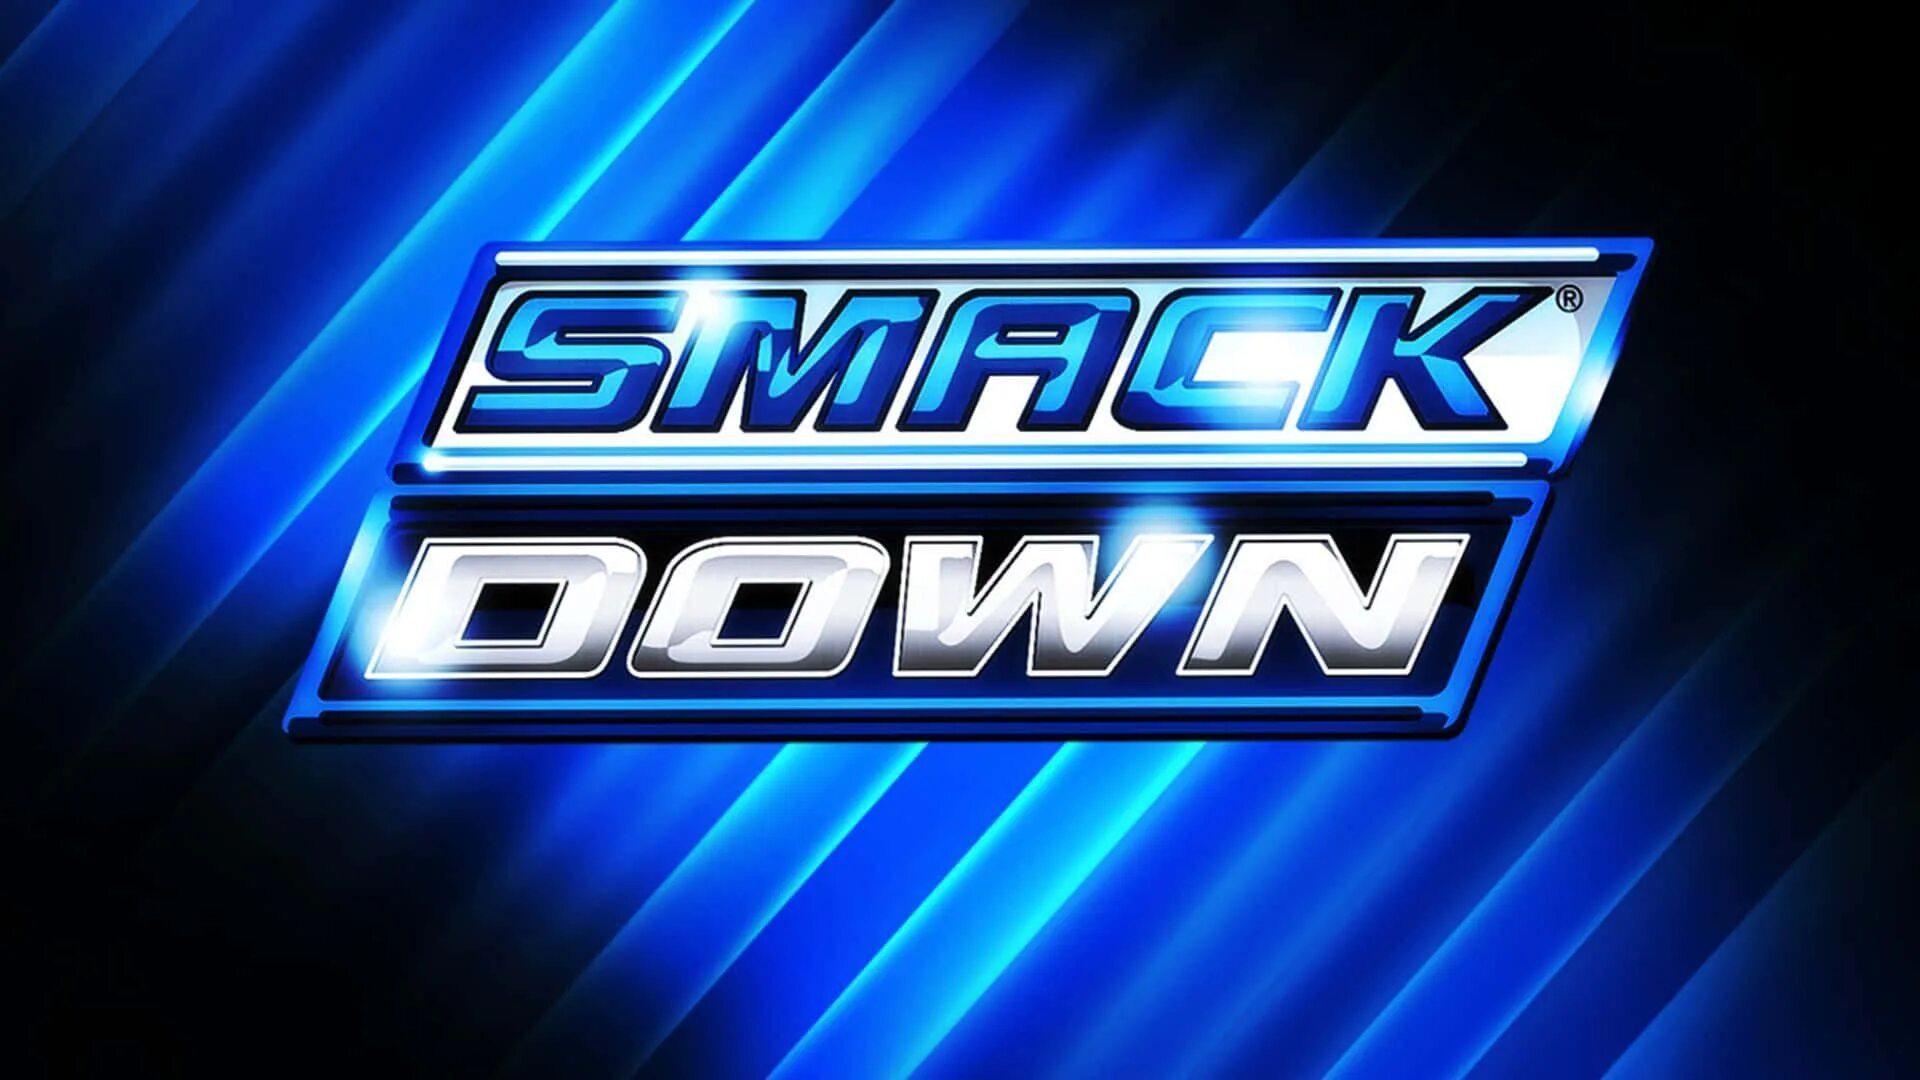 Wwe smackdown русская версия. Реслинг WWE SMACKDOWN. Рестлер WWE SMACKDOWN. WWE SMACKDOWN logo. WWE SMACKDOWN Live.